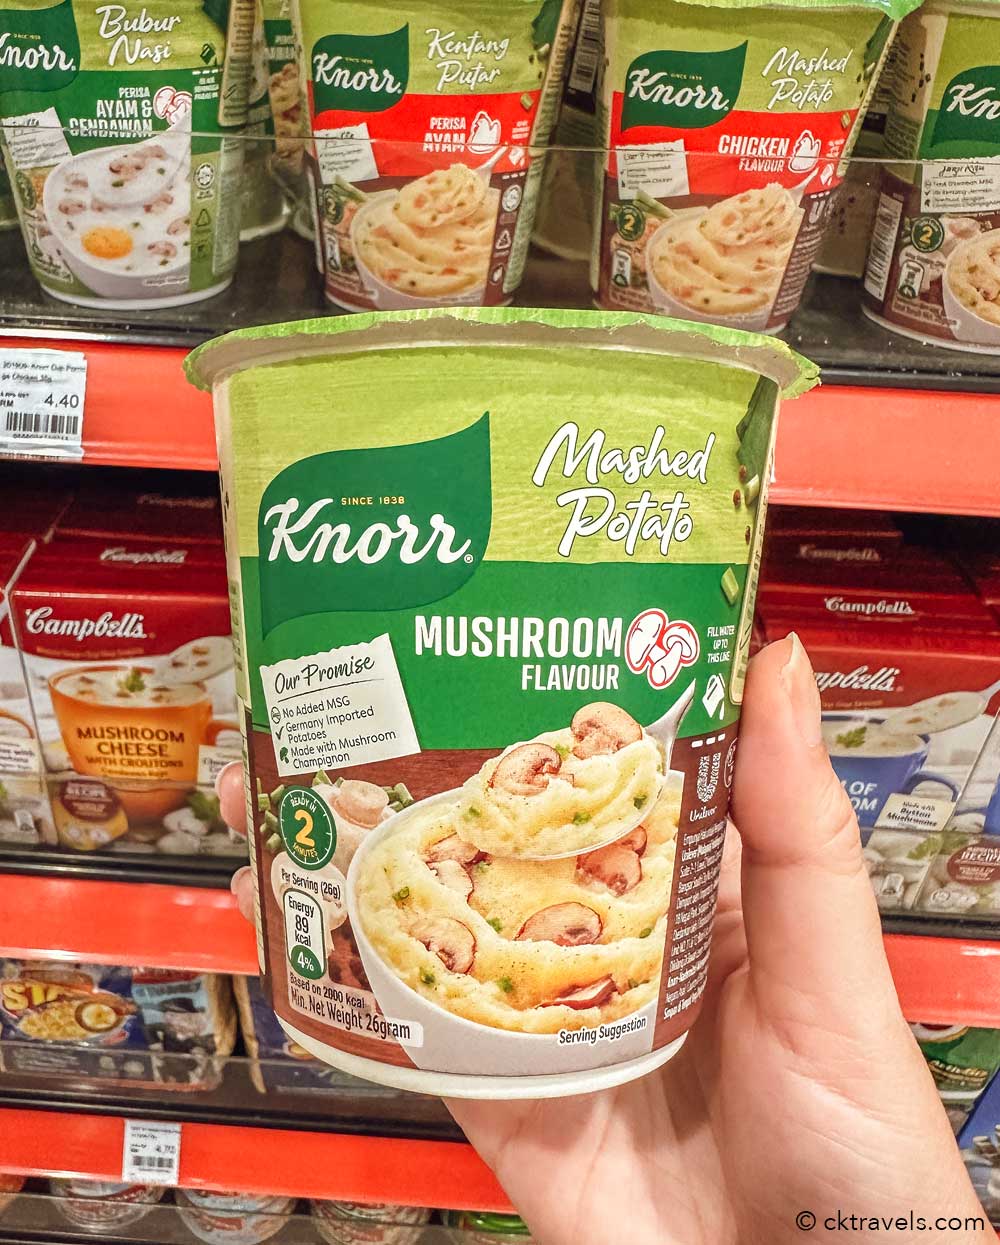 Knorr Mashed Potato Malaysia 7-Eleven